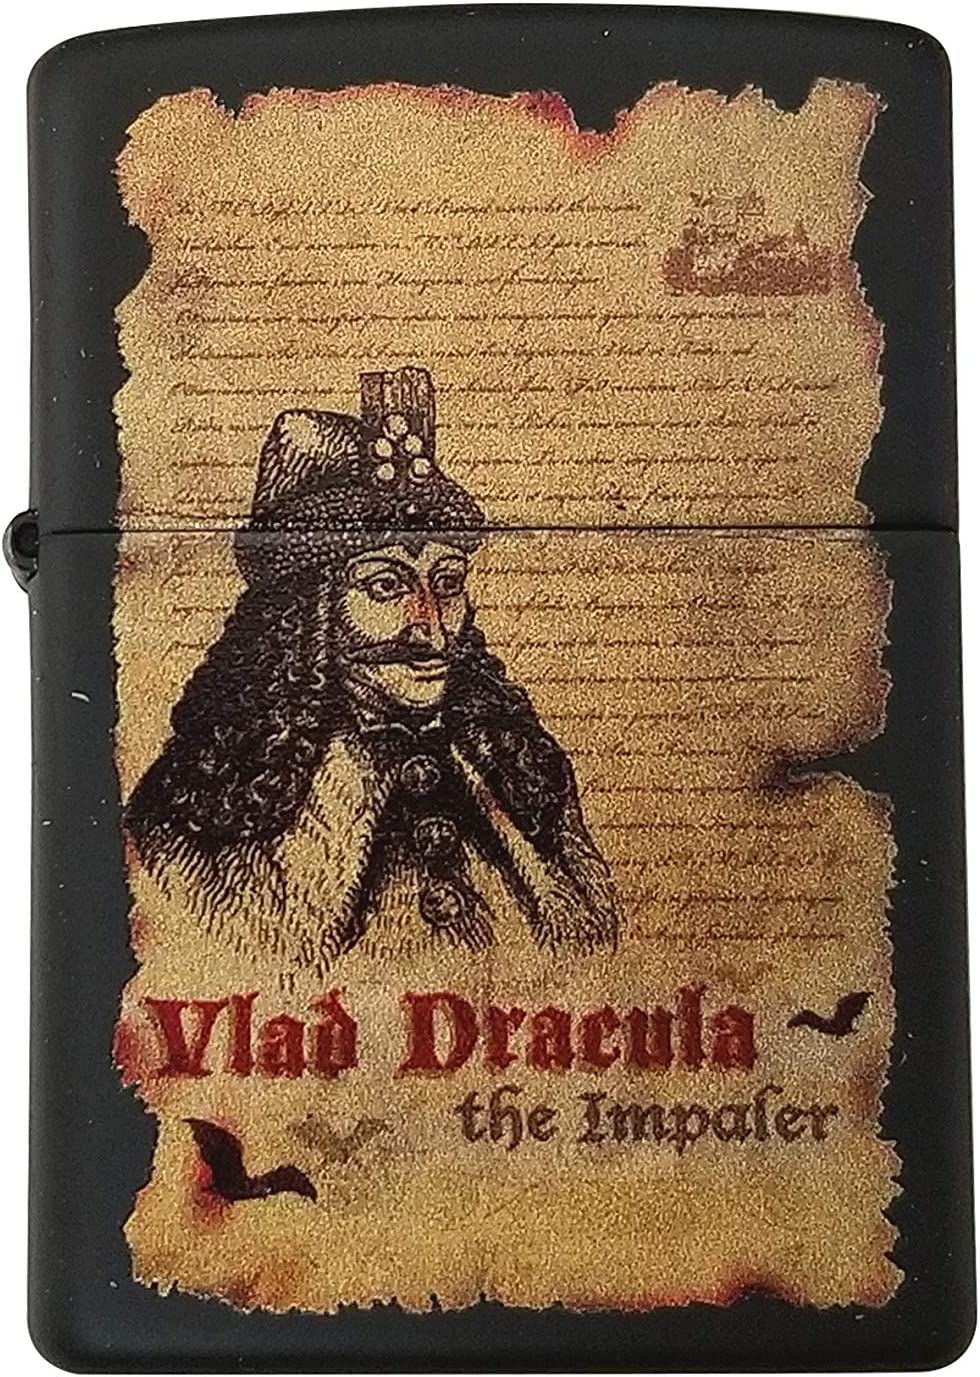 Vlad Dracula the Impaler, Historic Wallachian Ruler - Black Matte Zippo Lighter